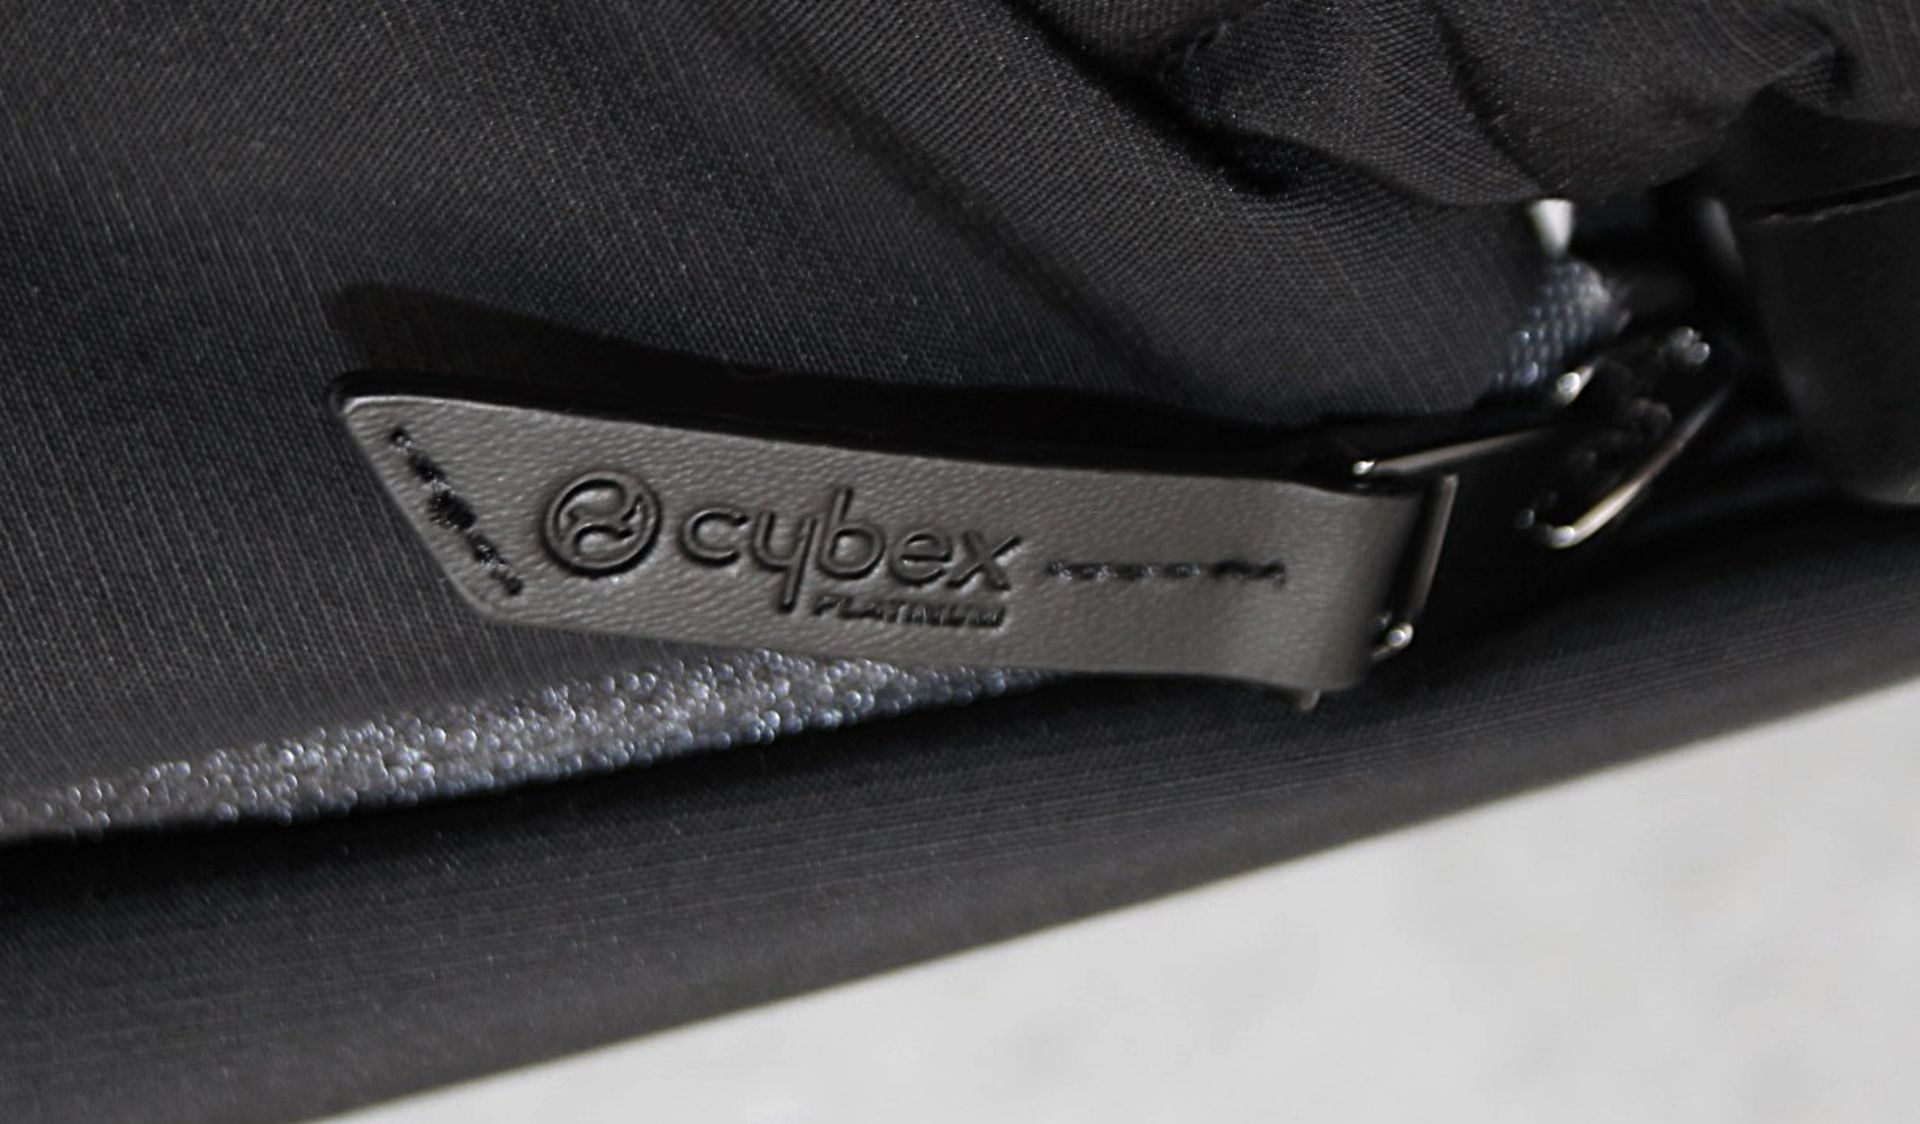 1 x CYBEX 'Priam' Luxury Carrycot In Black - Original Price £329.95 - Unused Boxed Stock - Image 10 of 19